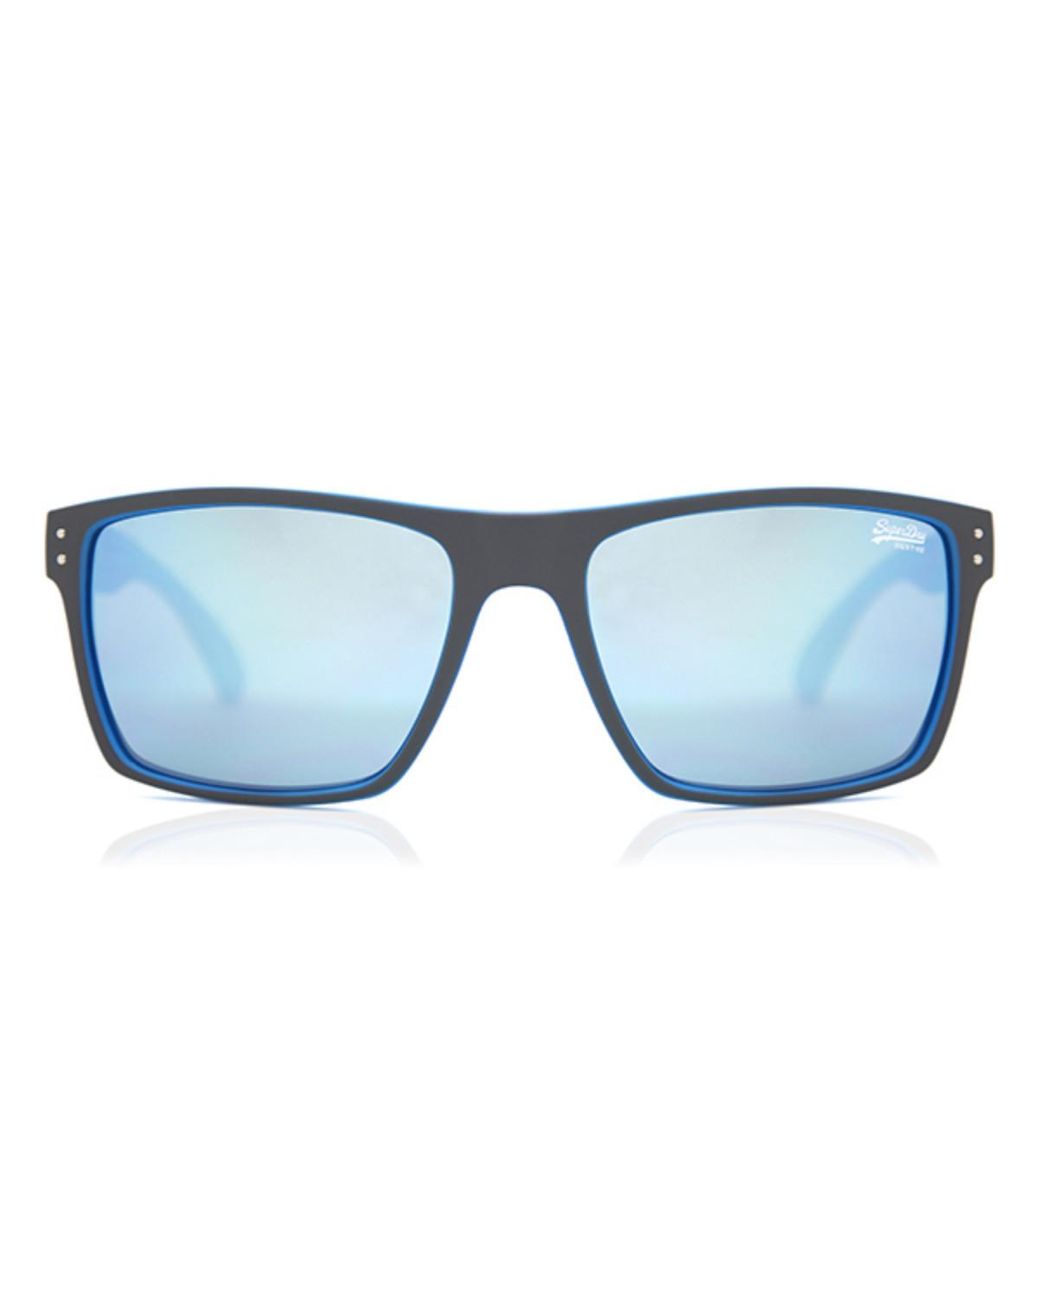 Superdry Sds Kobe 105 Sunglasses in Blue for Men - Lyst